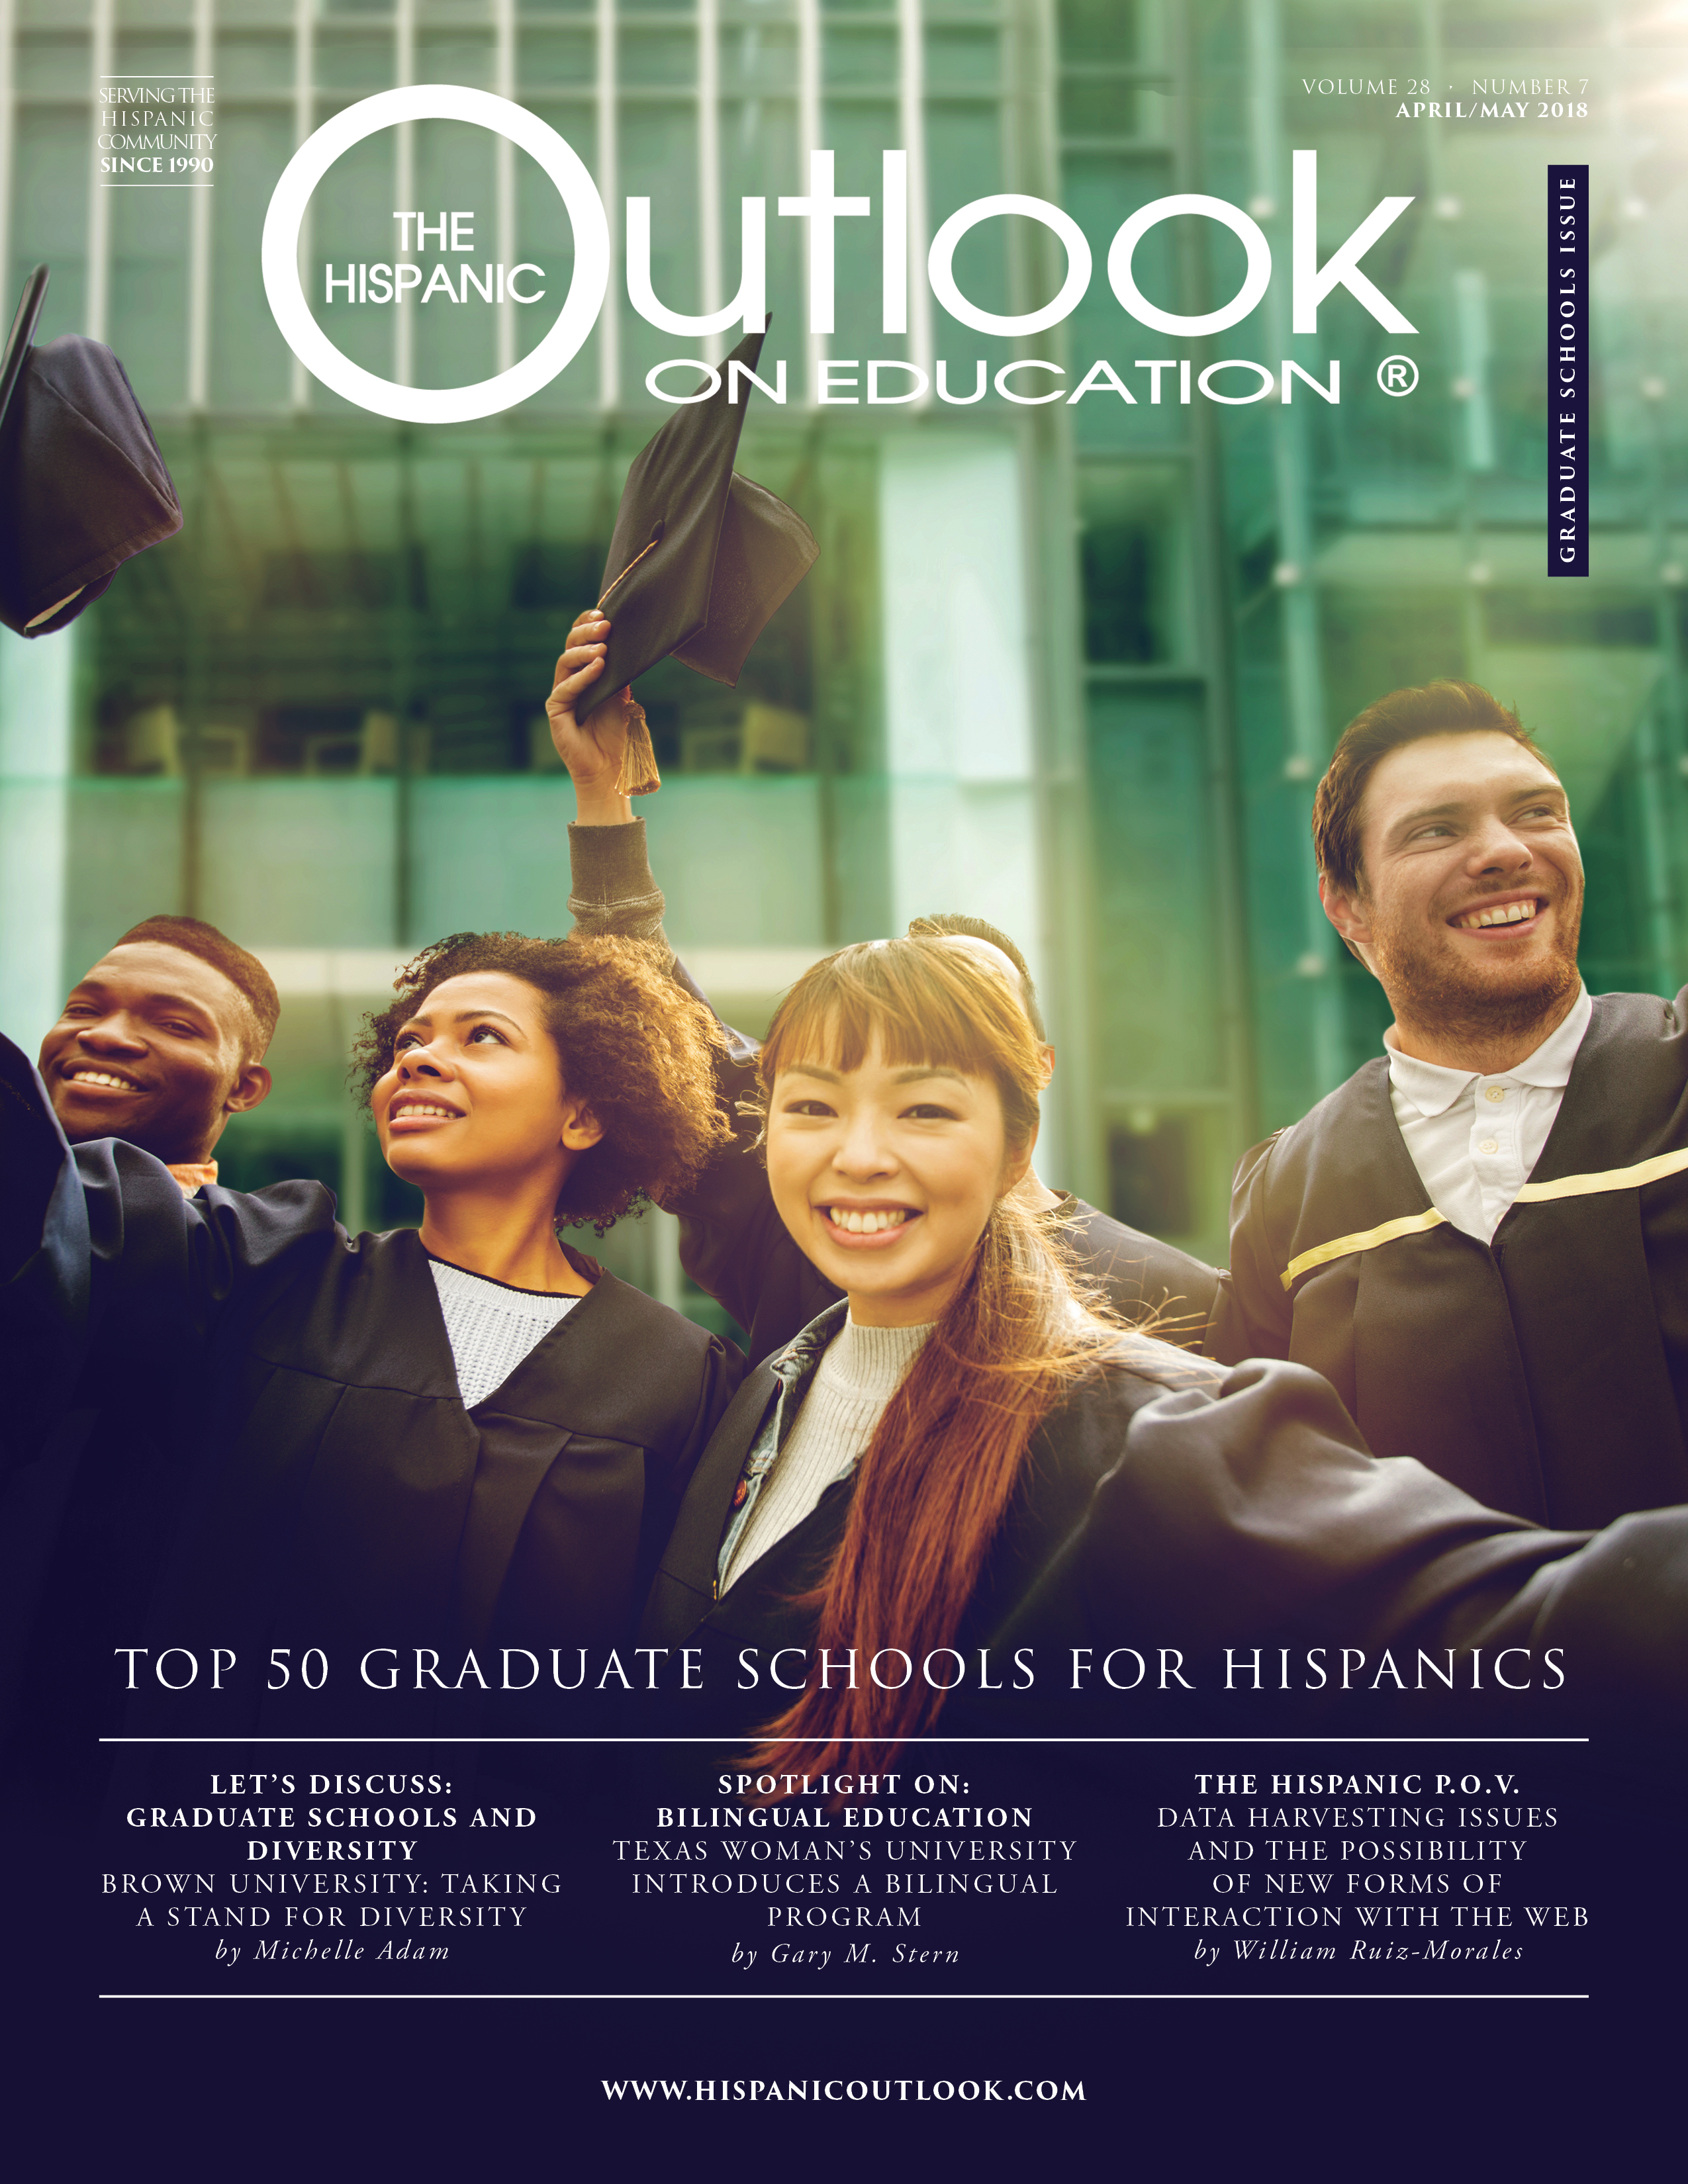 Top 50 Graduate Schools for Hispanics